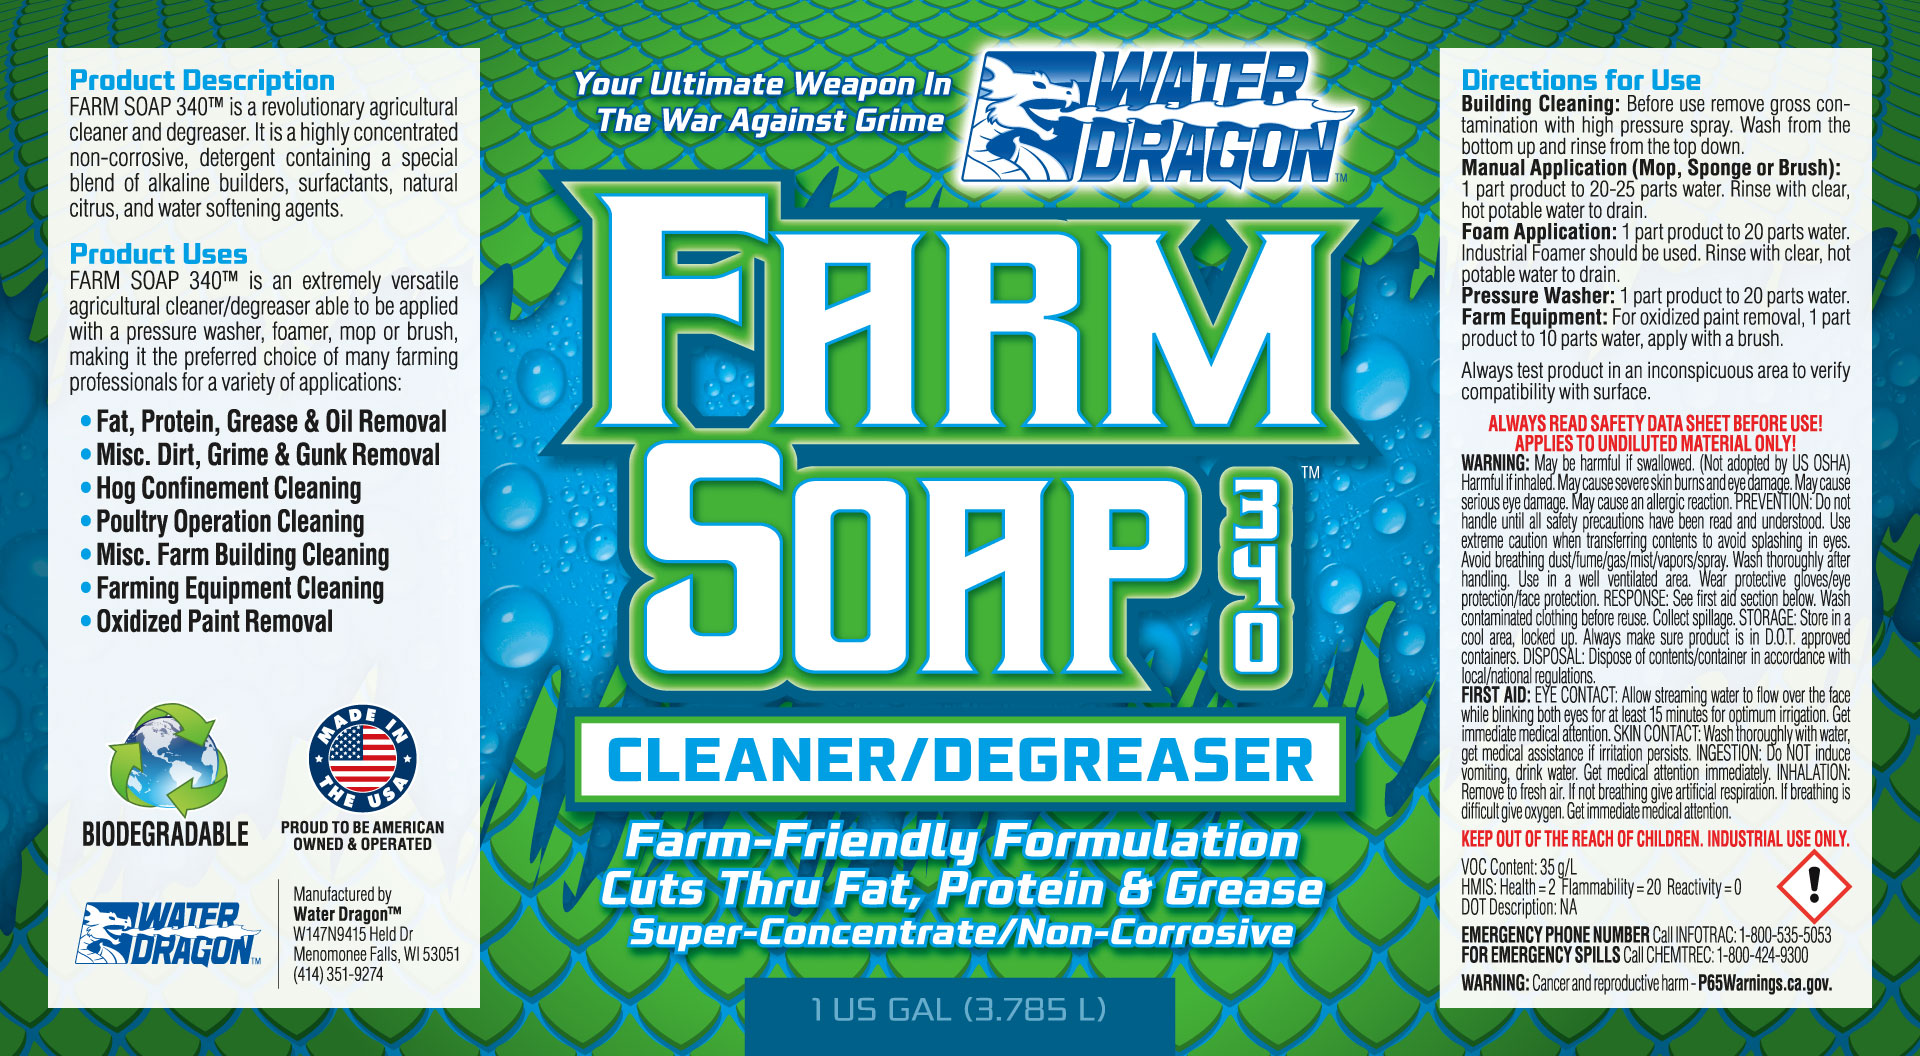 Water Dragon Farm Soap